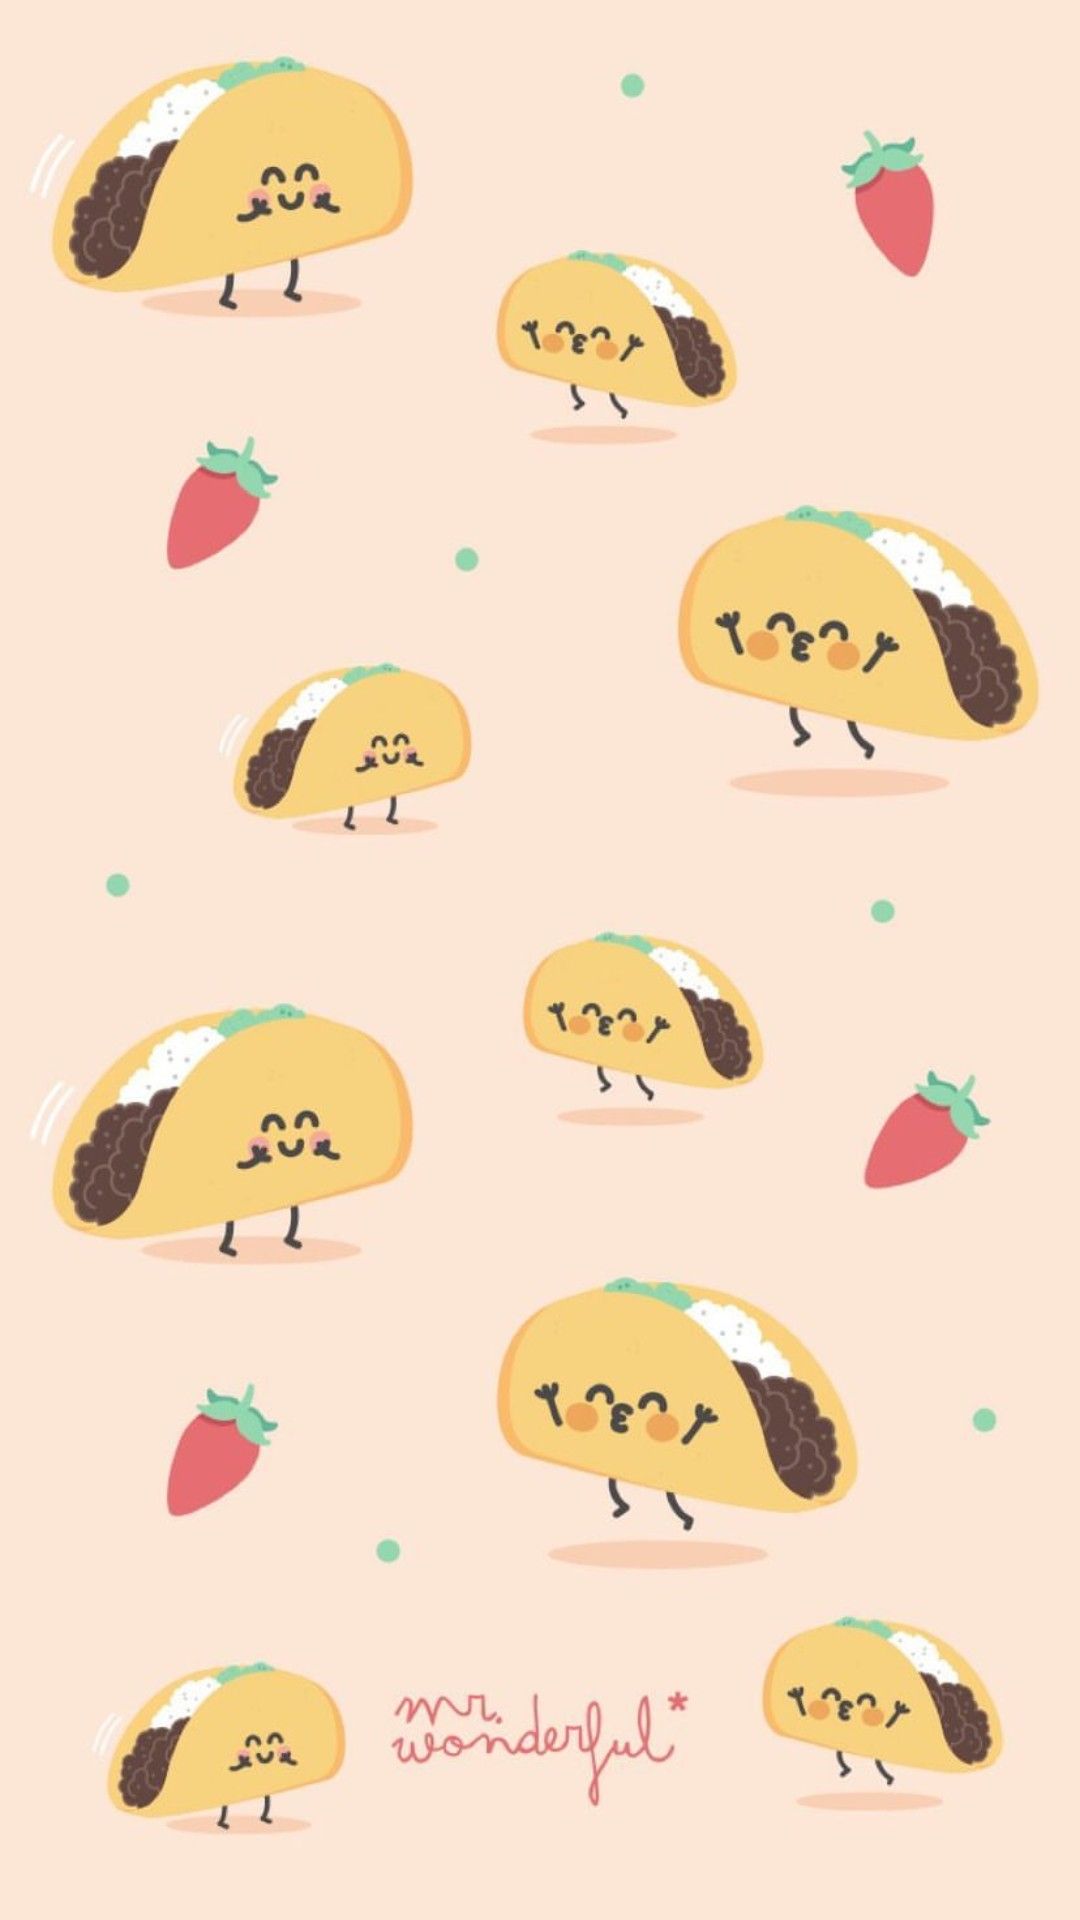 Mr. Wonderful. Wallpaper iphone cute, Taco wallpaper, Kawaii wallpaper